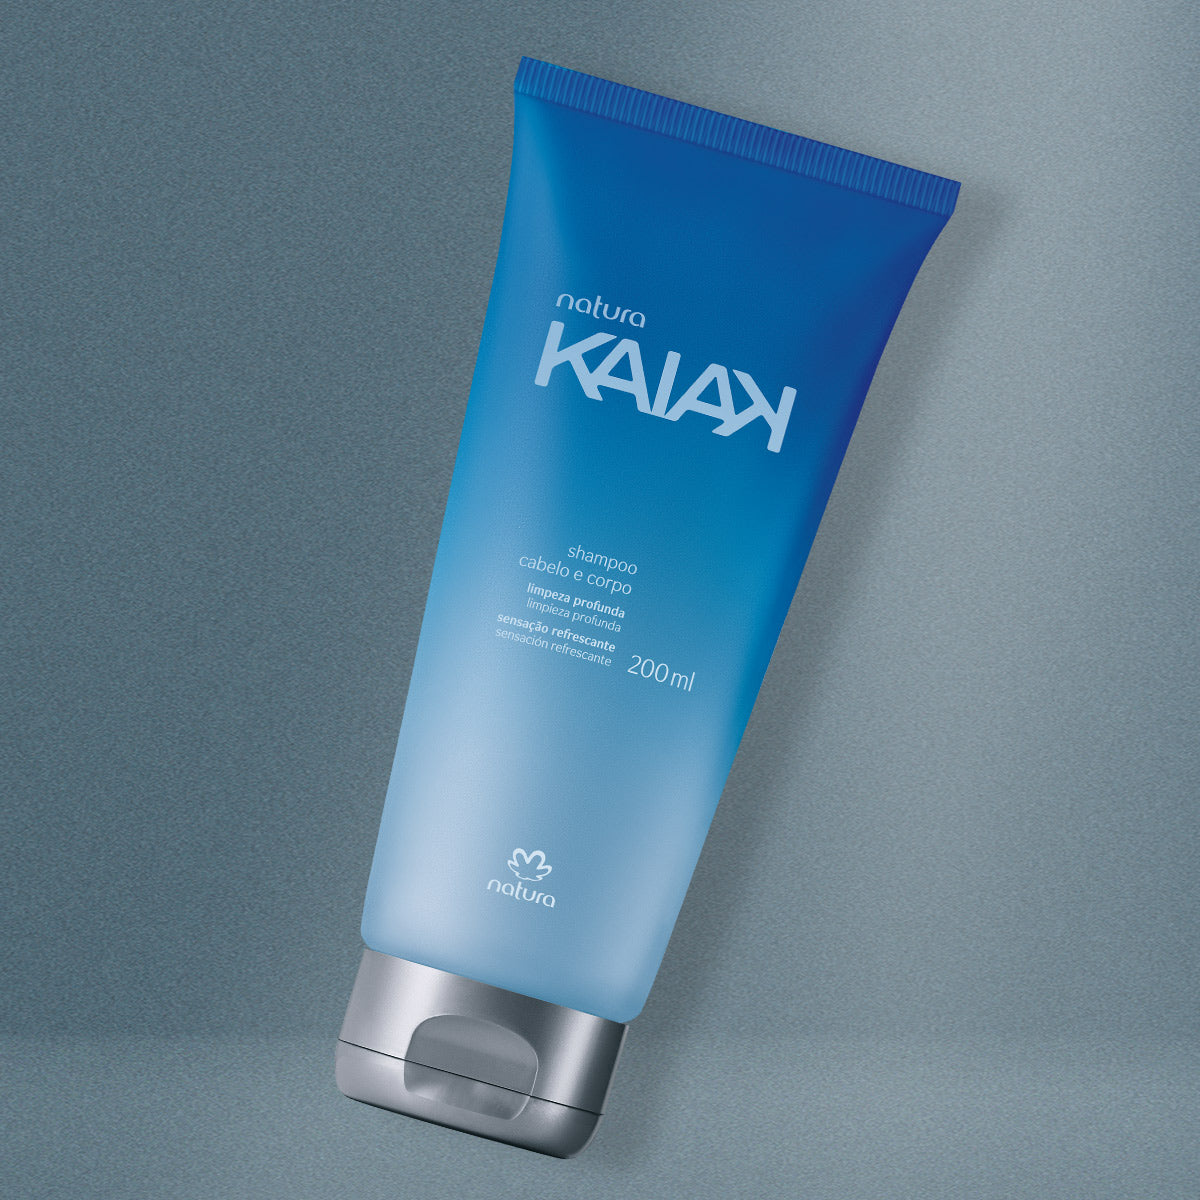 Kaiak Men's Hair and Body Shampoo 200ml